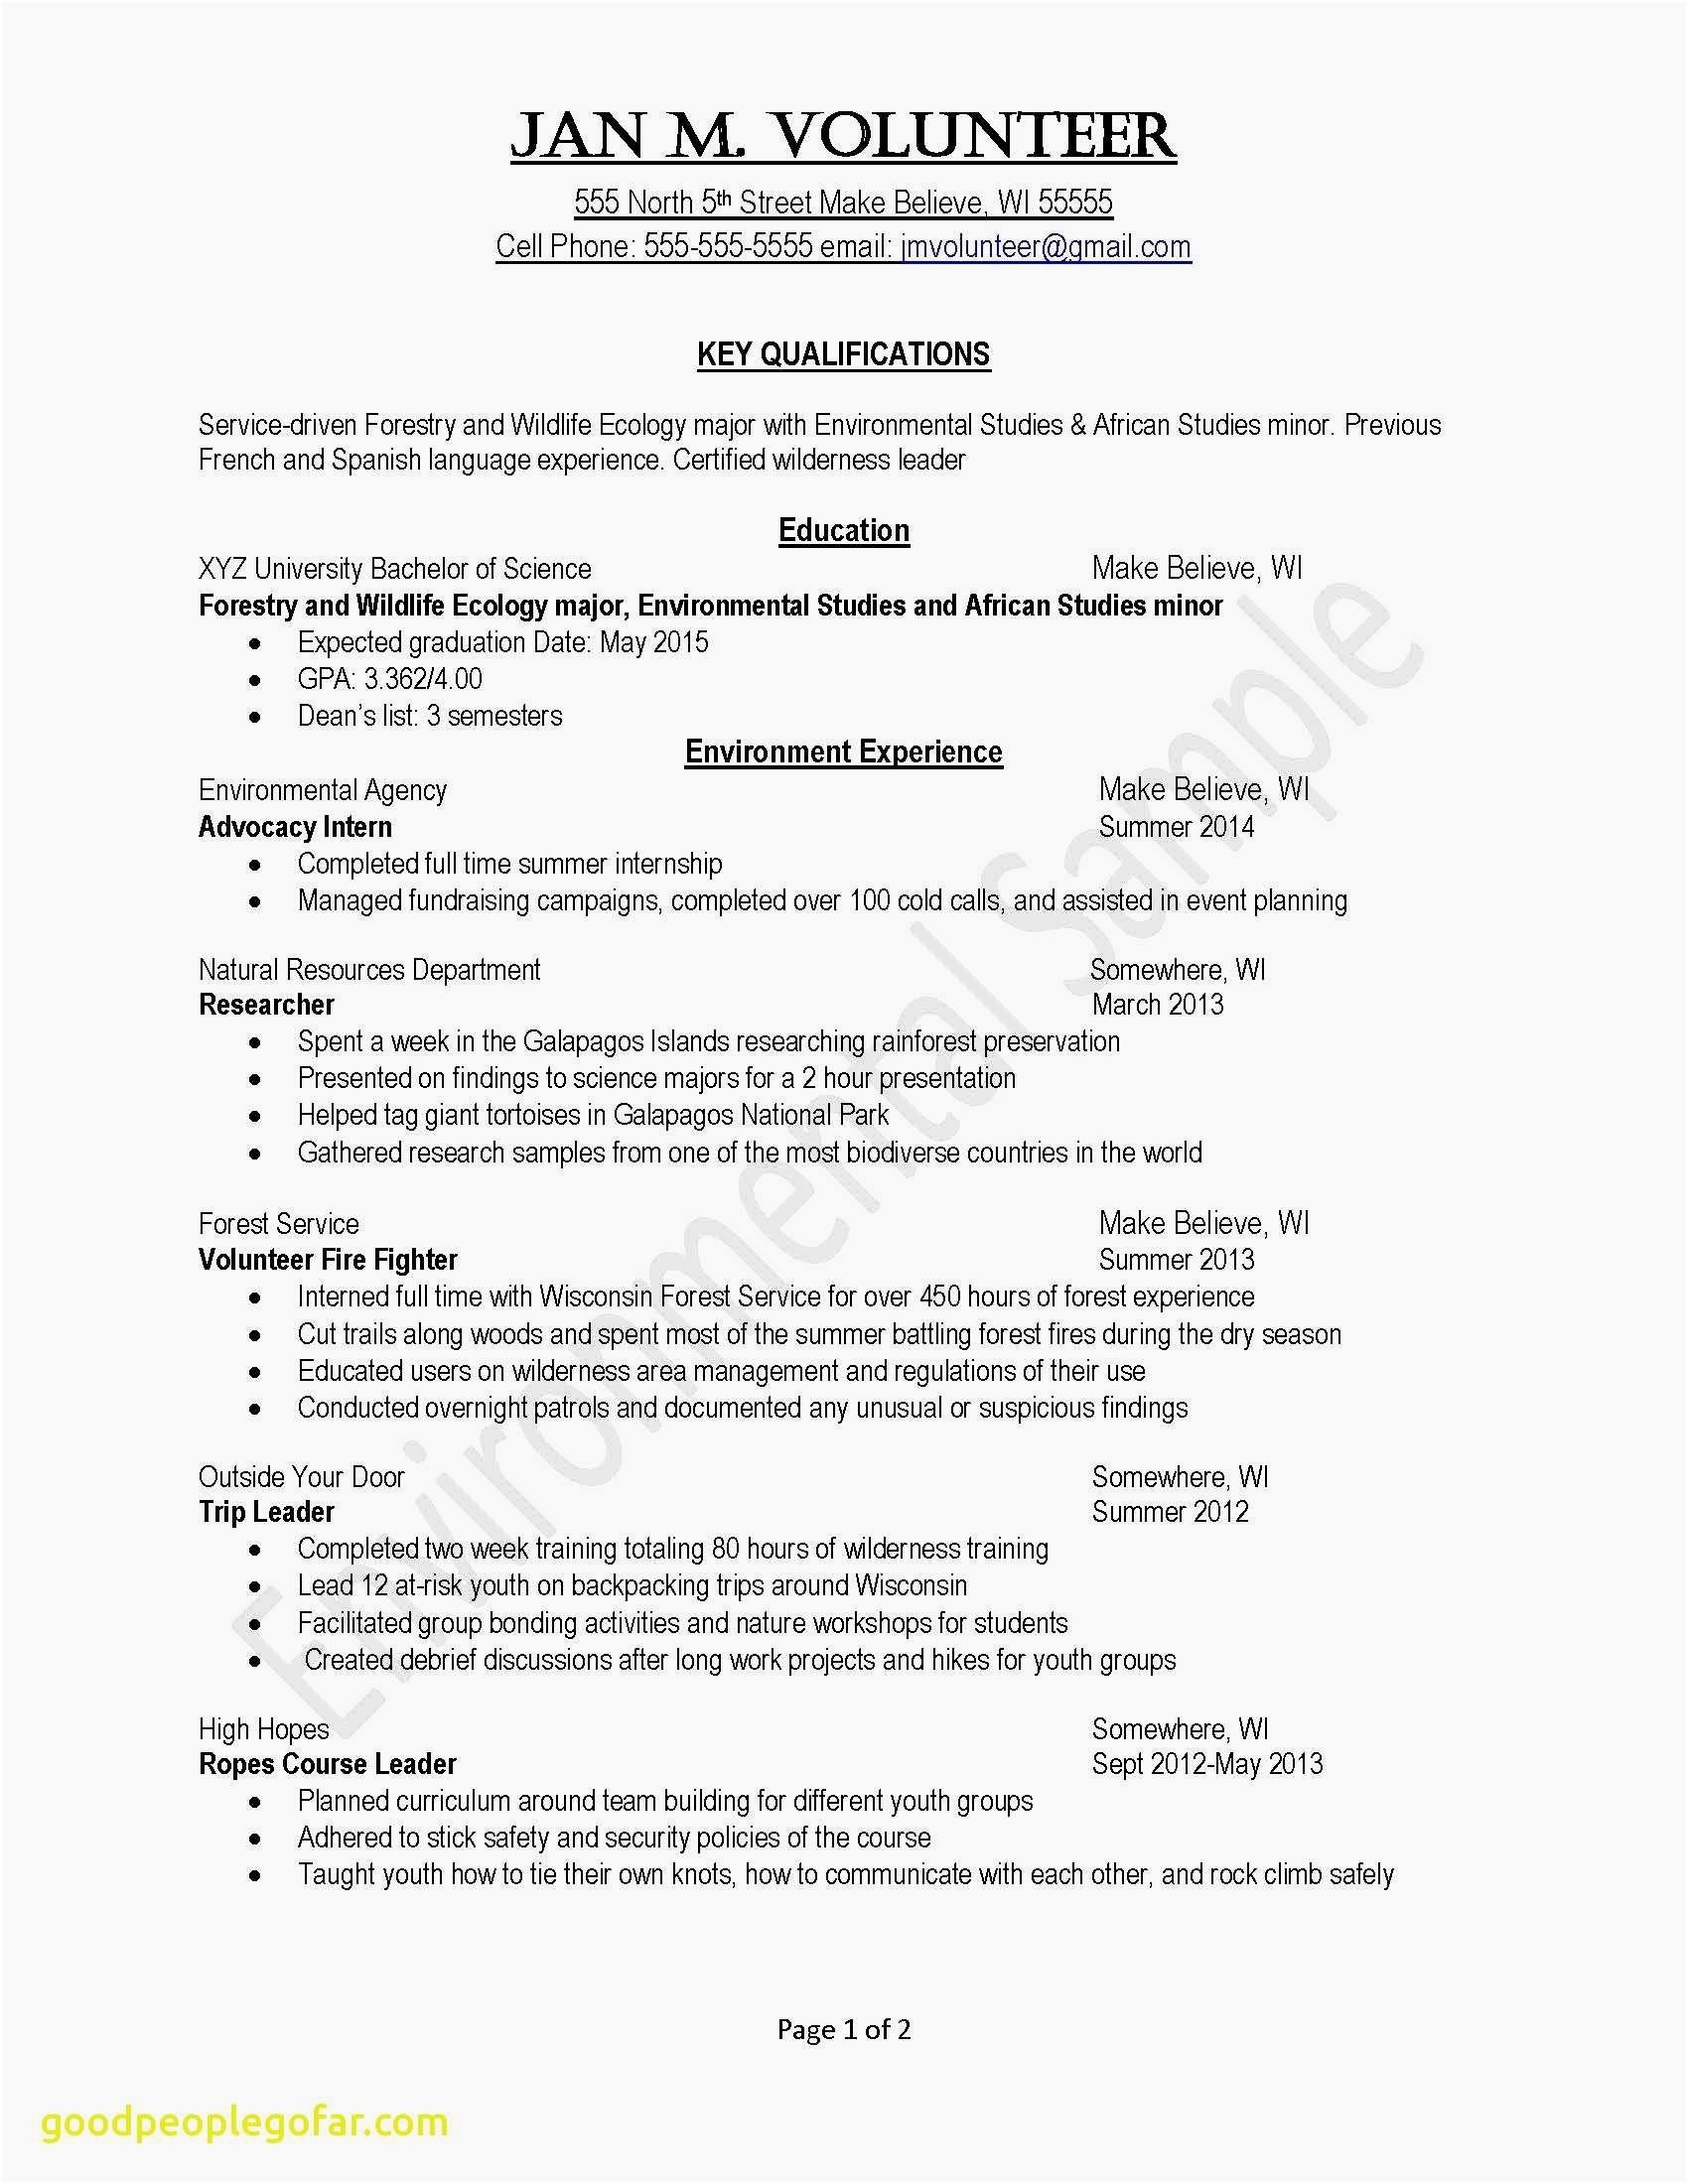 Sample Resume Objectives Resume Objectives For Accounting Graduates 79 New S Sample Resume Objective Accountant Of Resume Objectives For Accounting Graduates sample resume objectives|wikiresume.com